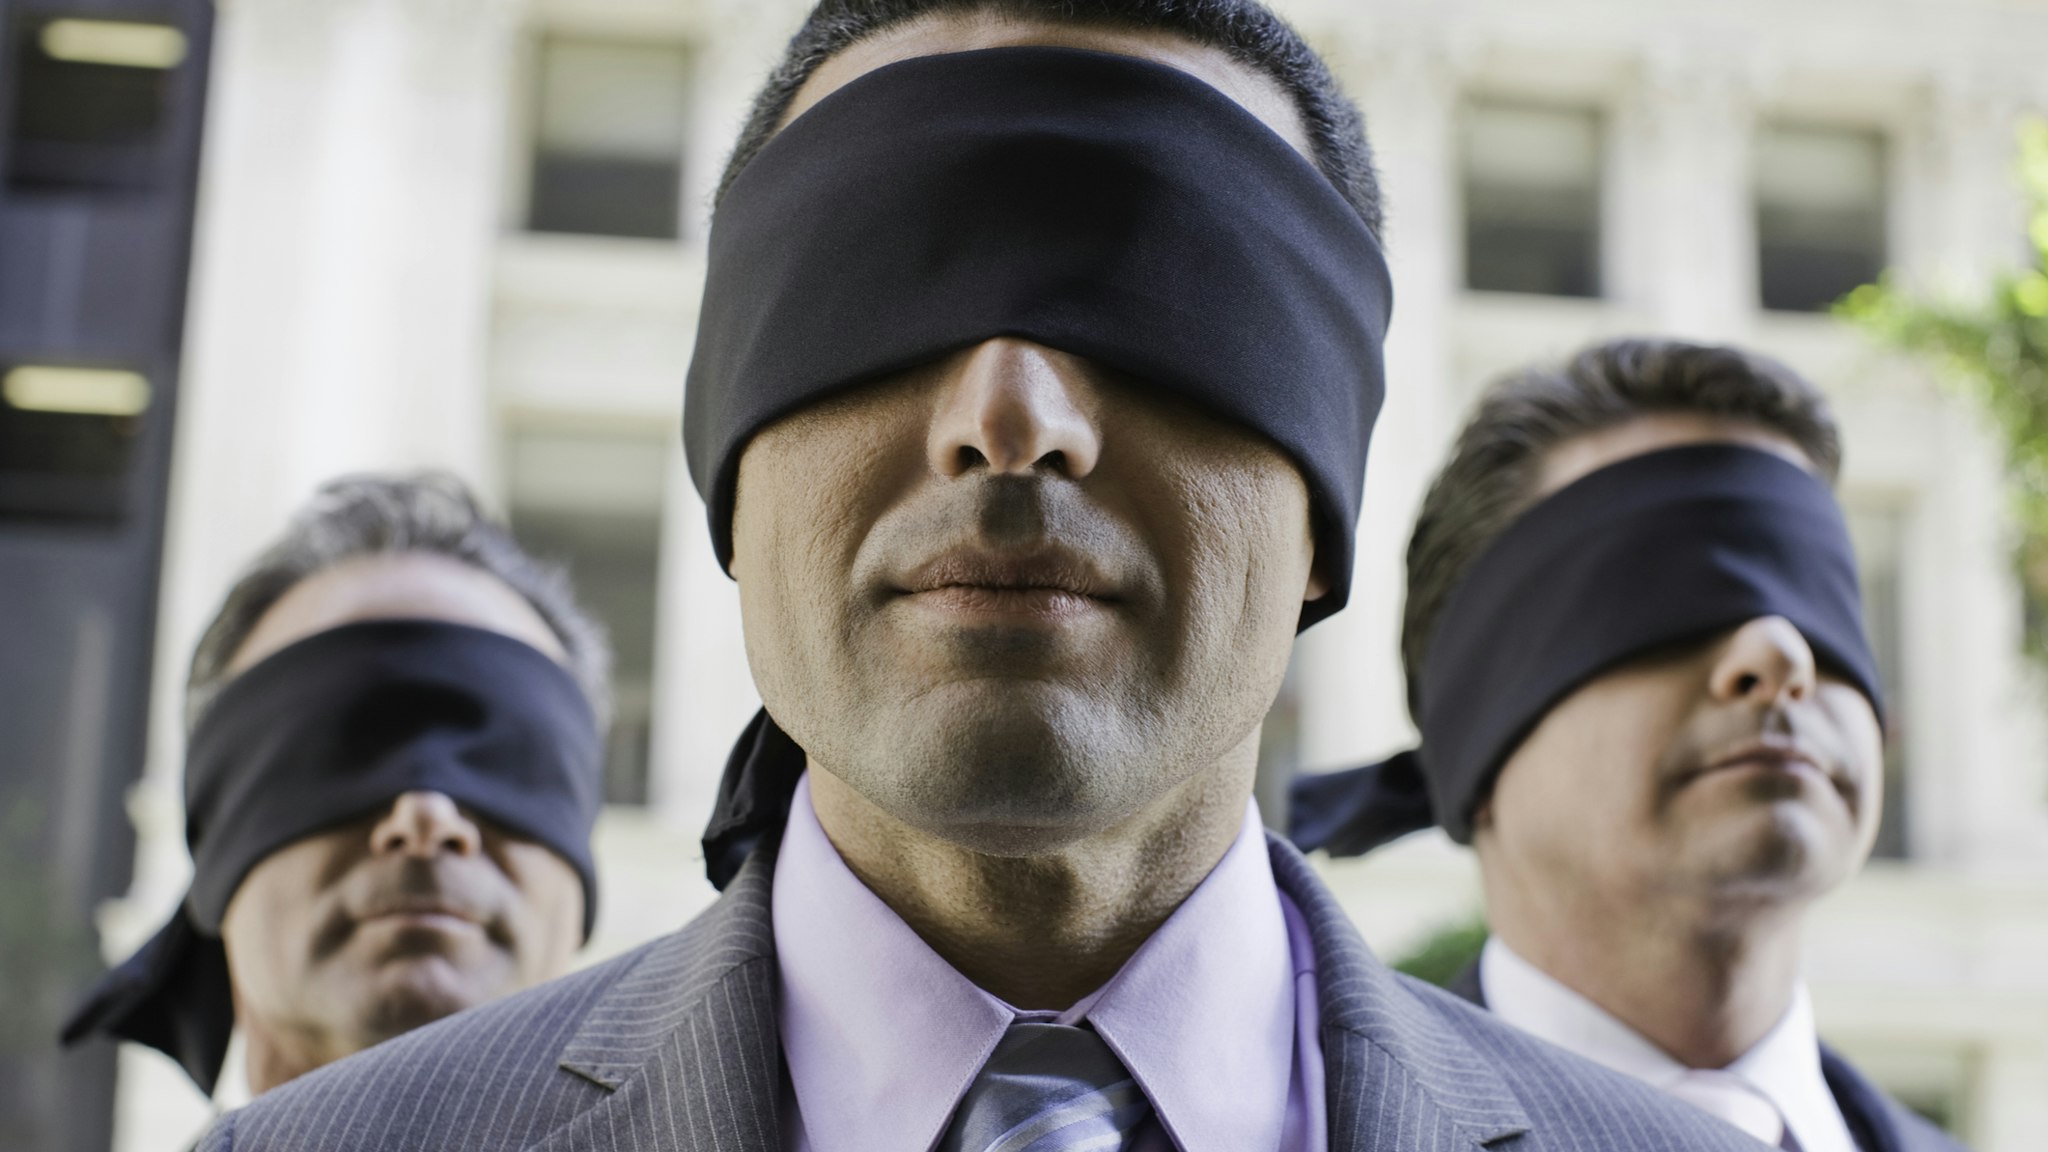 Three blindfolded businessmen - stock photo USA, California, San Francisco